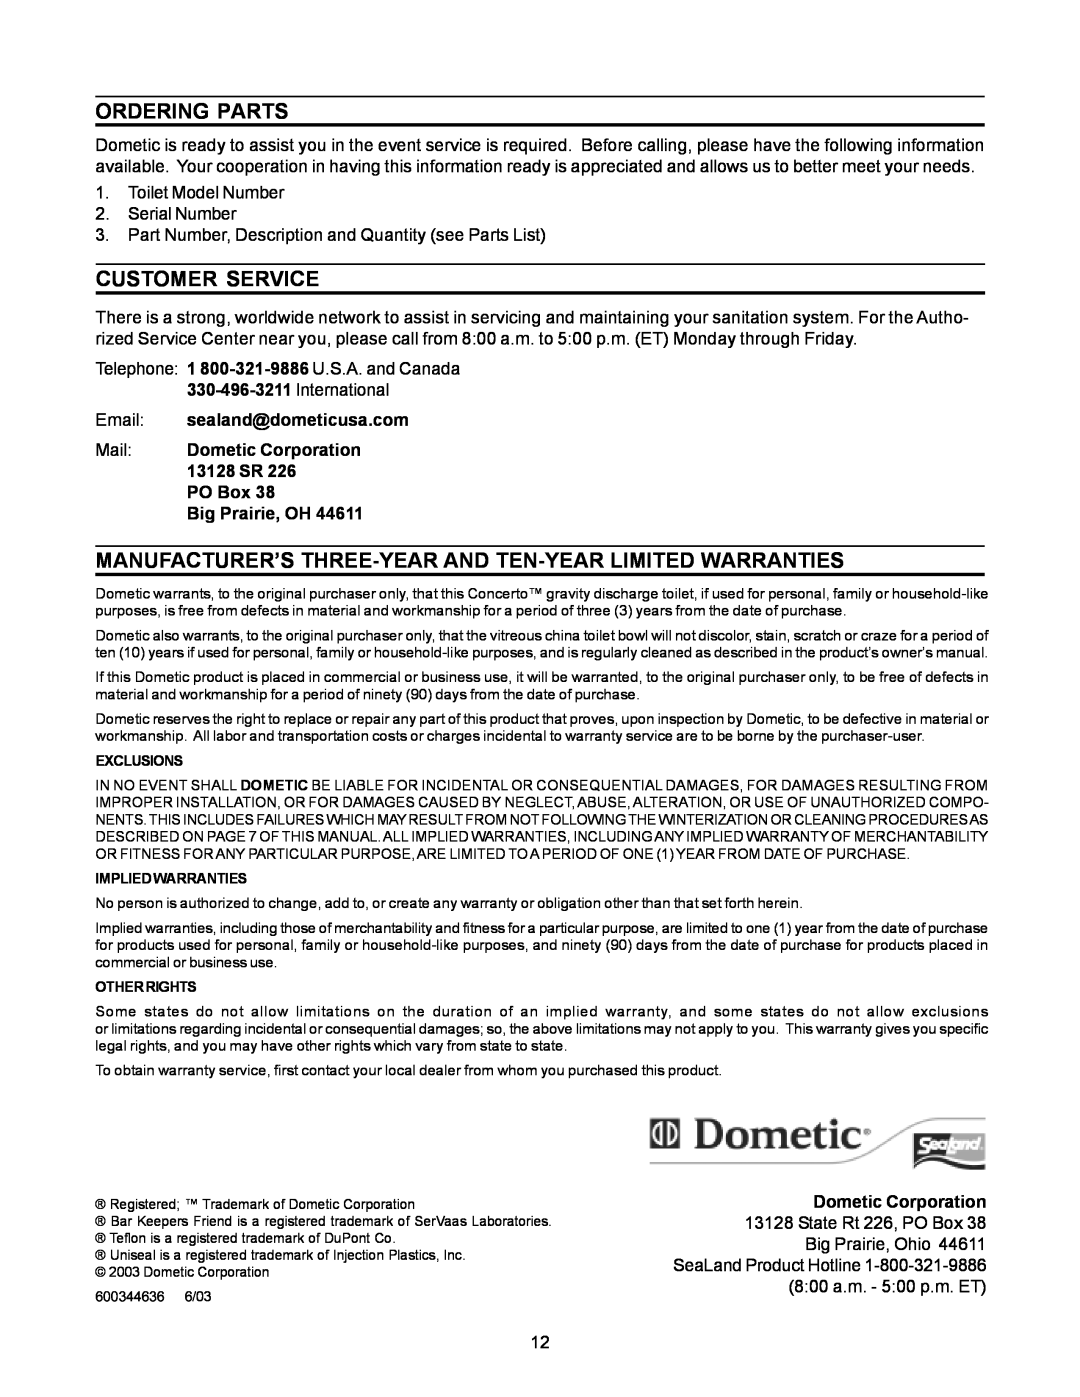 Dometic 3210 manual Ordering Parts, Customer Service, Mail Dometic Corporation 13128 SR PO Box, Big Prairie, OH 